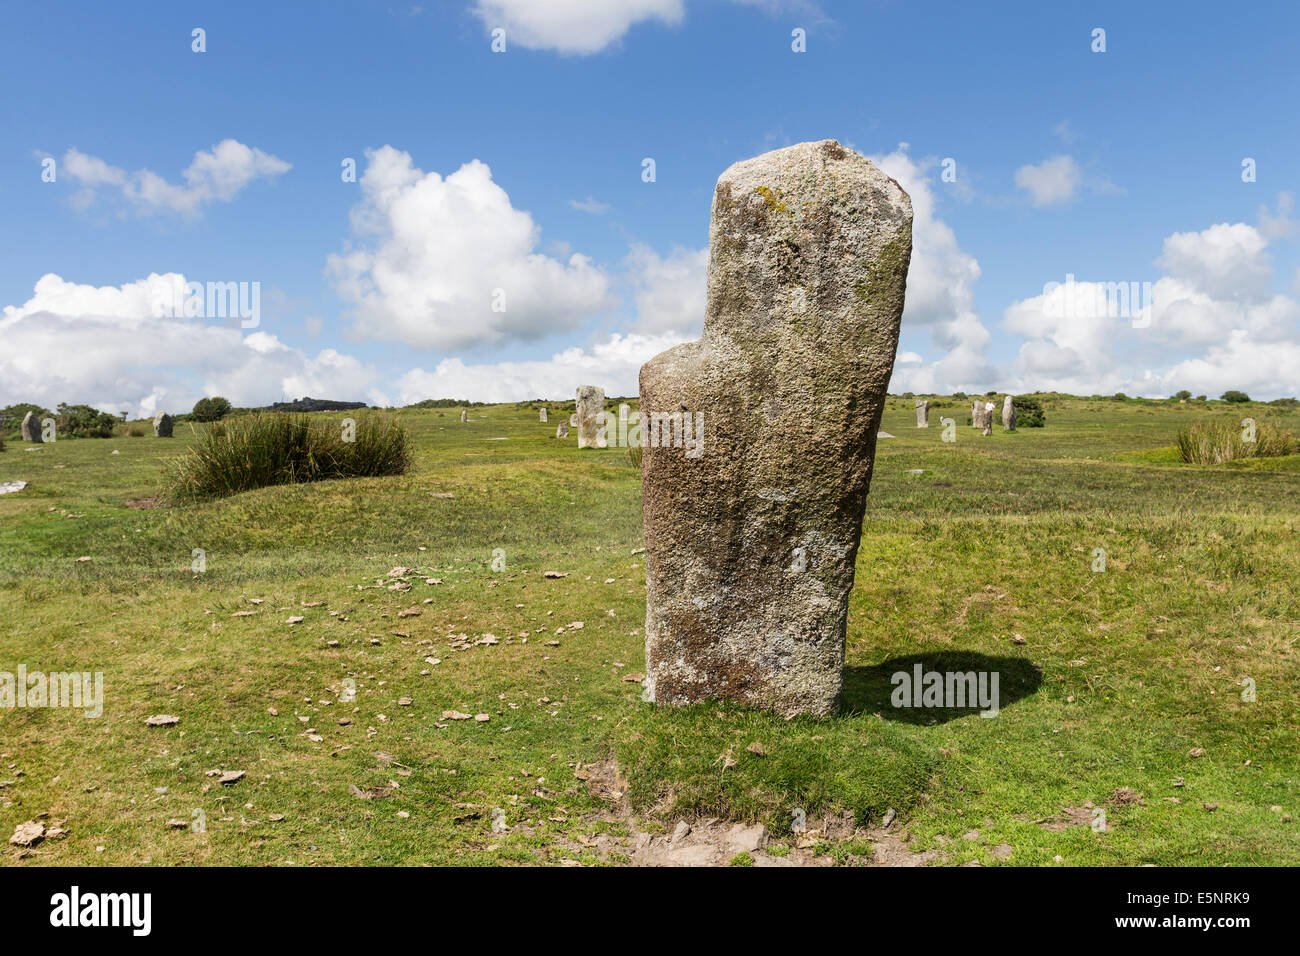 Figurent parmi les pierres près de larbins, Bodmin Moor Cornwall UK Banque D'Images